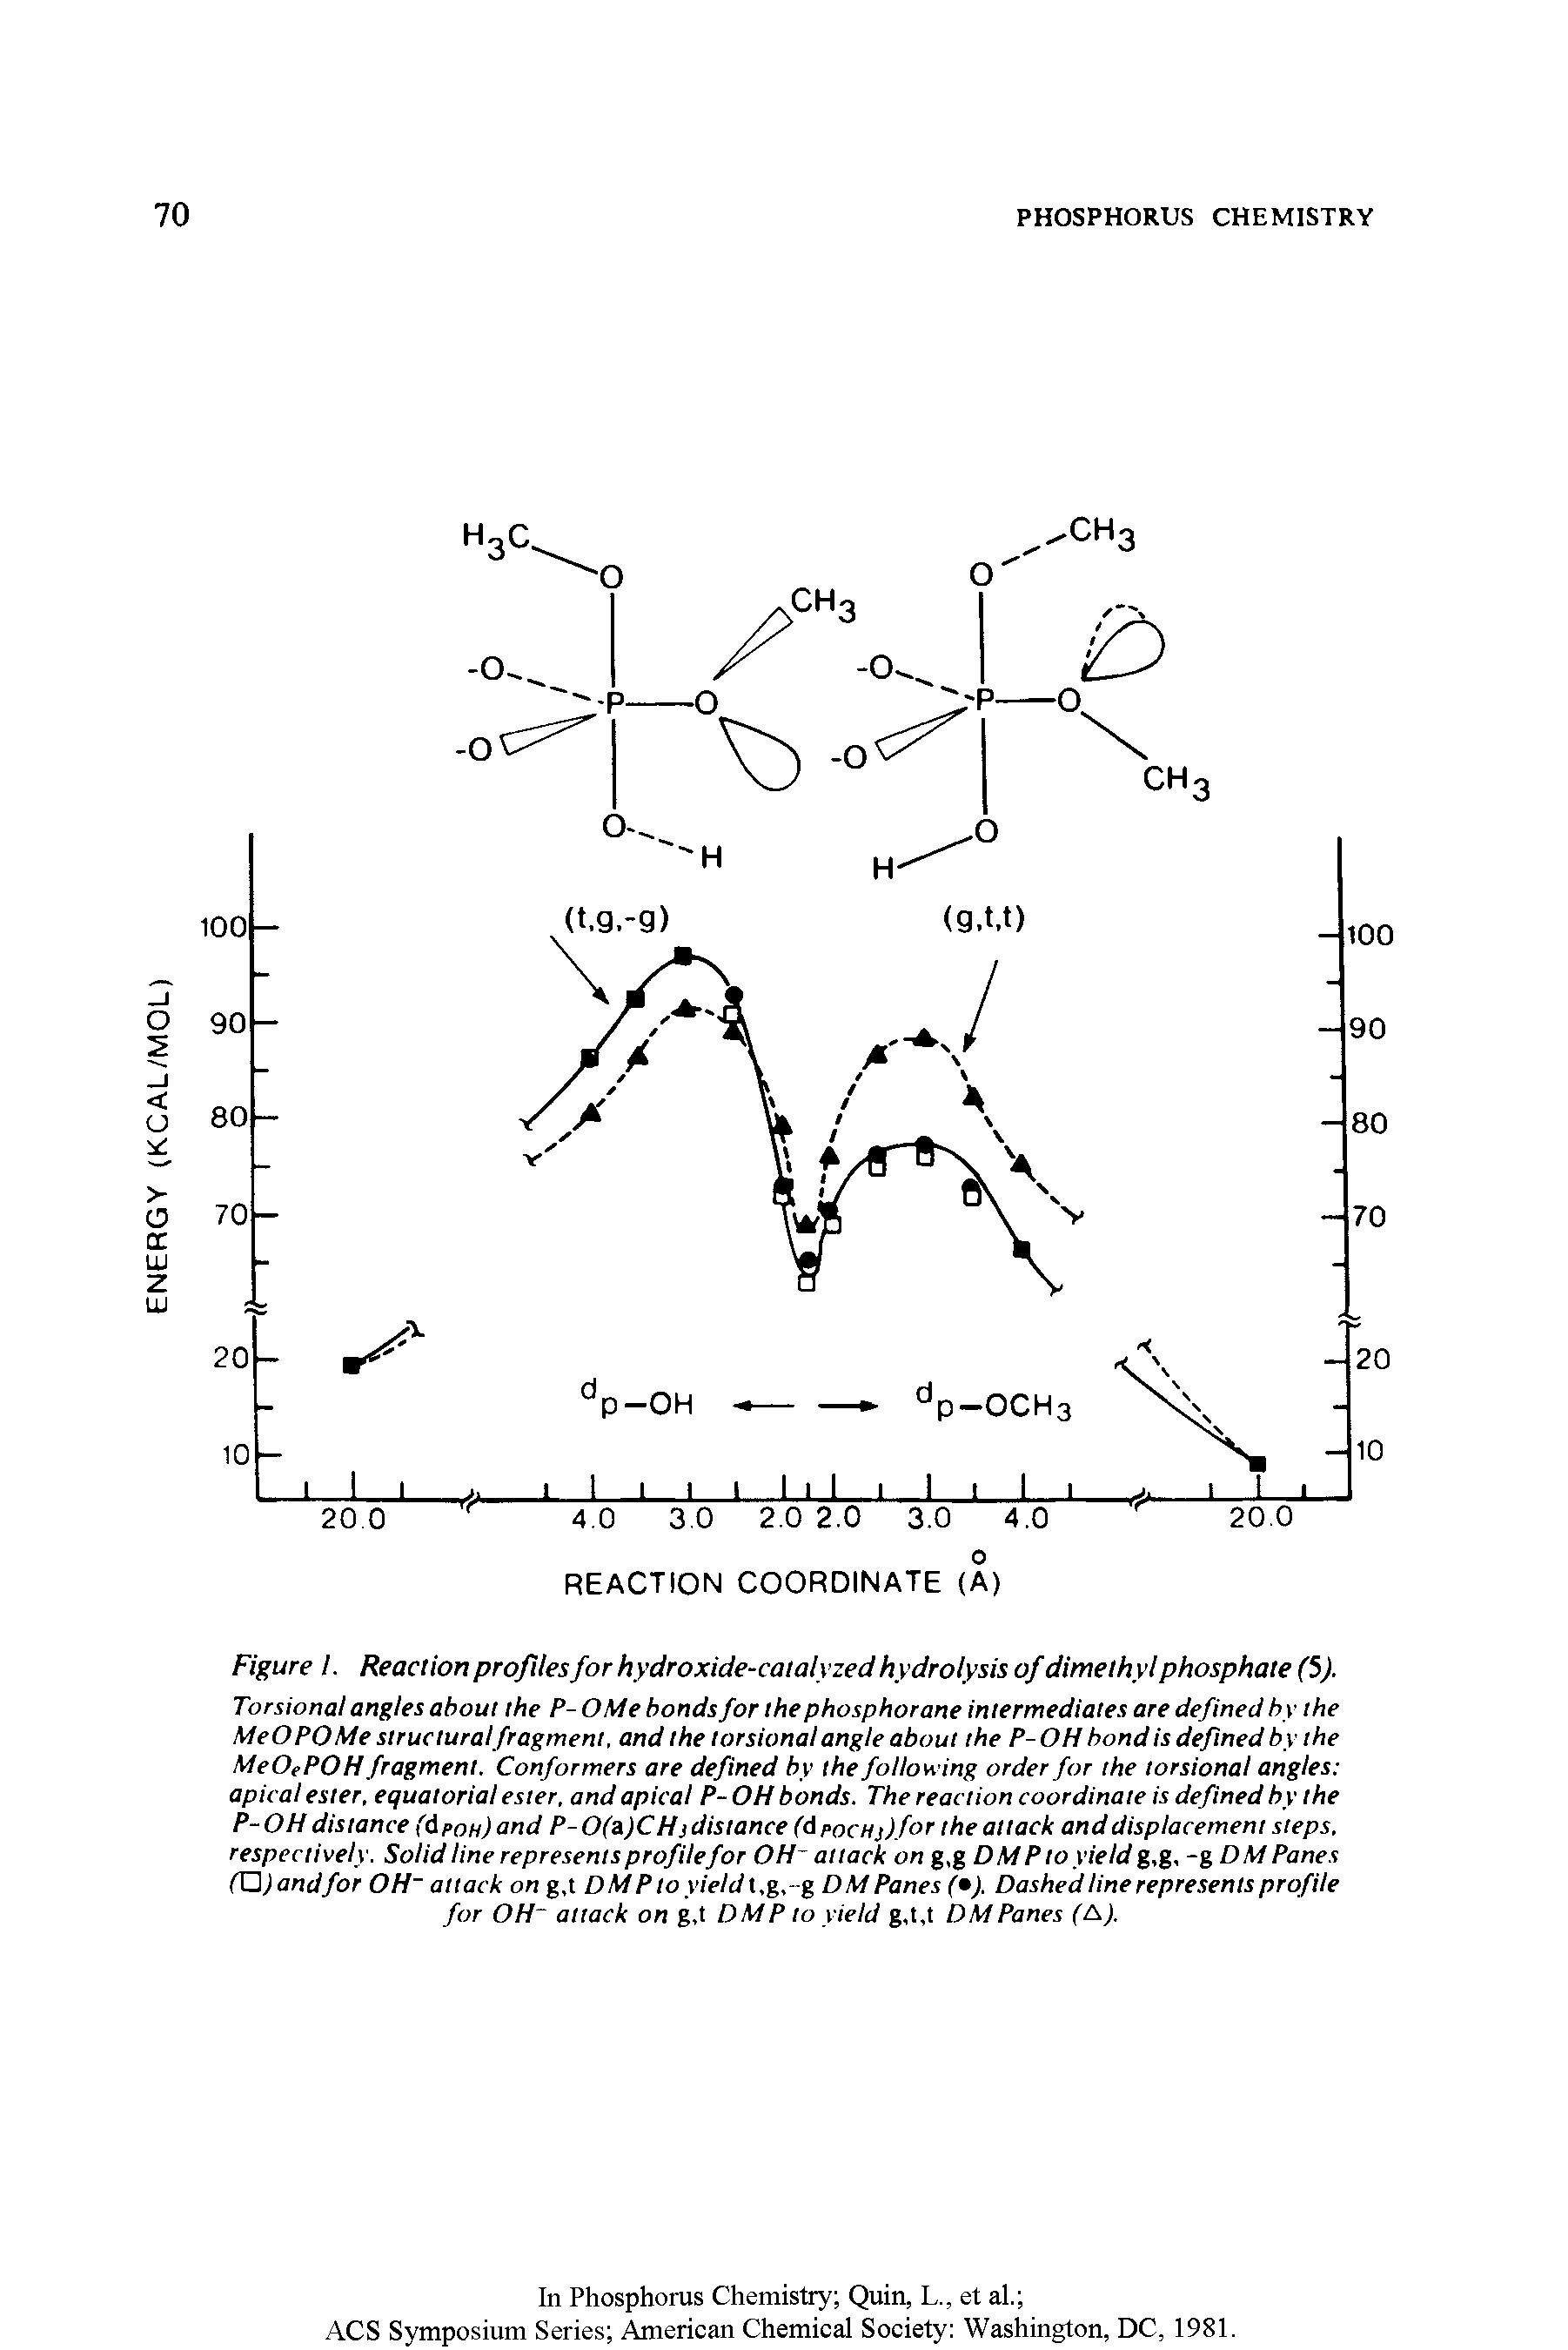 Figure I. Reaction profiles for hydroxide-catalyzed hydrolysis of dimethyl phosphate (5).